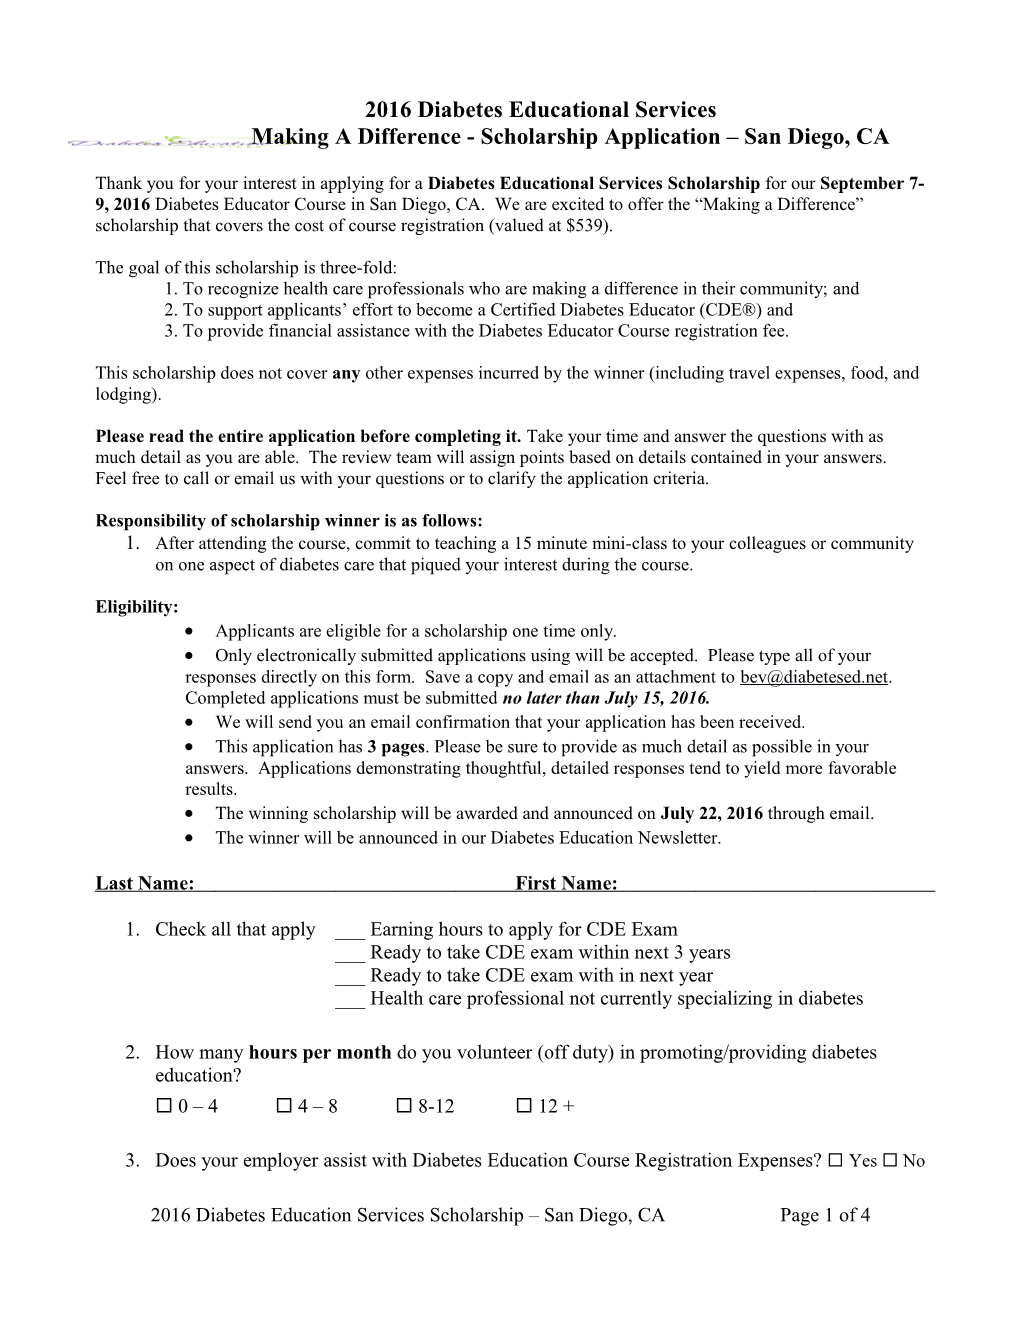 Scholarship Application-Oakland Diabetes Educator Course